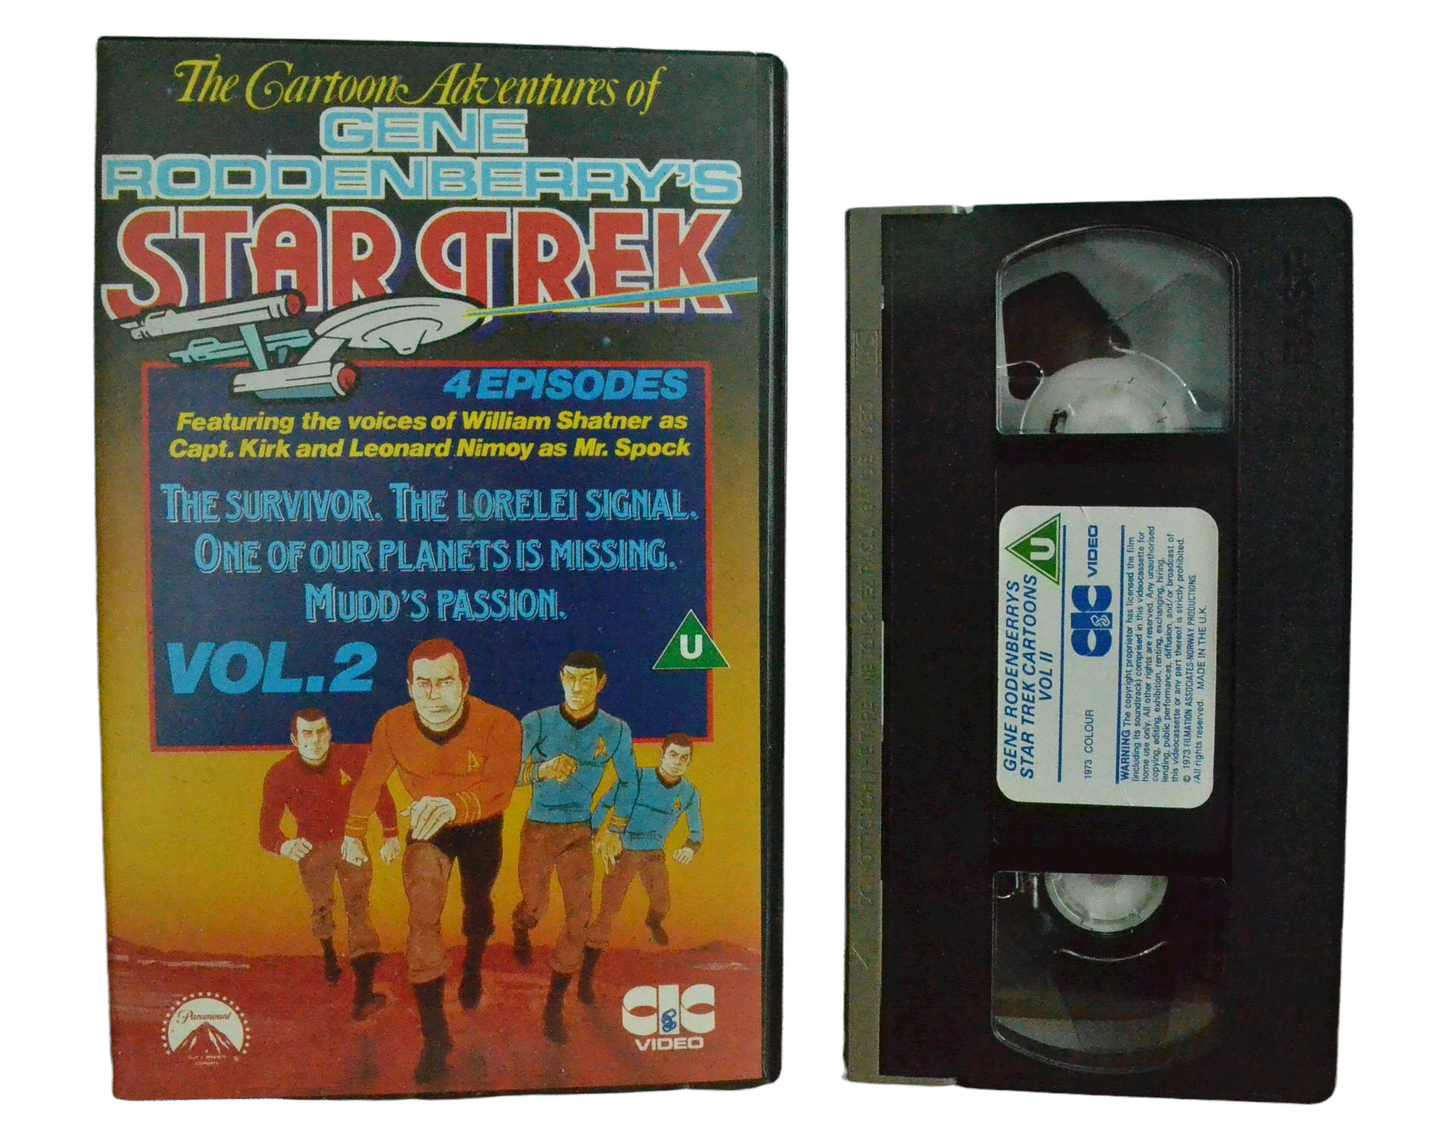 Gene Rodenberry's Star Trek Cartoons Vol II - William Shatner - CIC Video - Vintage - Pal VHS-